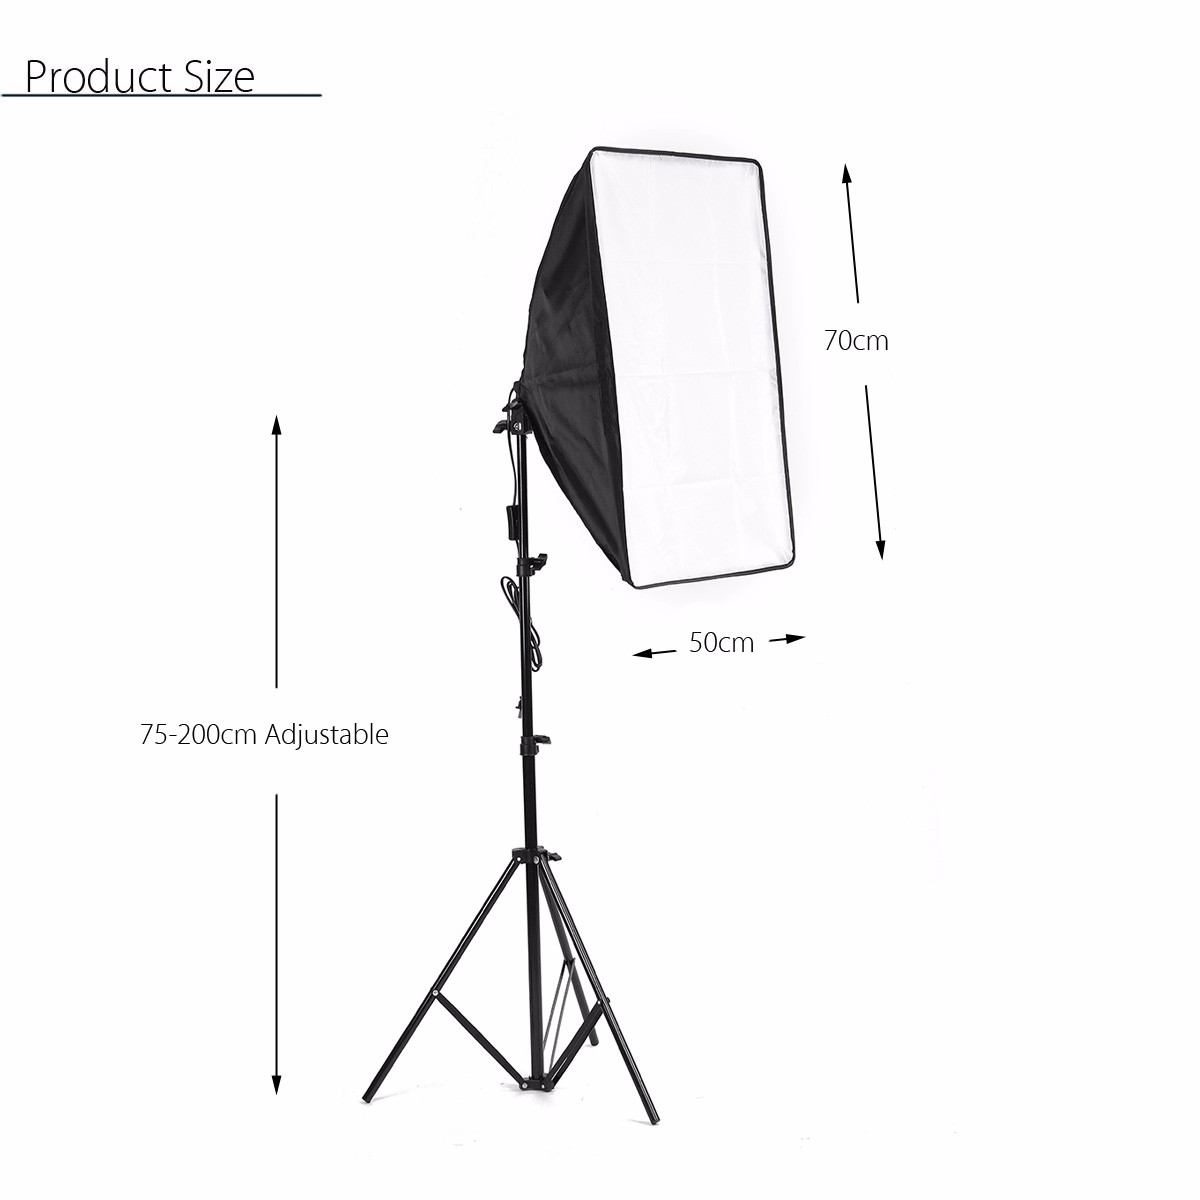 2x-Studio-Photography-Video-Softbox-Light-Stand-Lighting-Kit-50x70cm-1692022